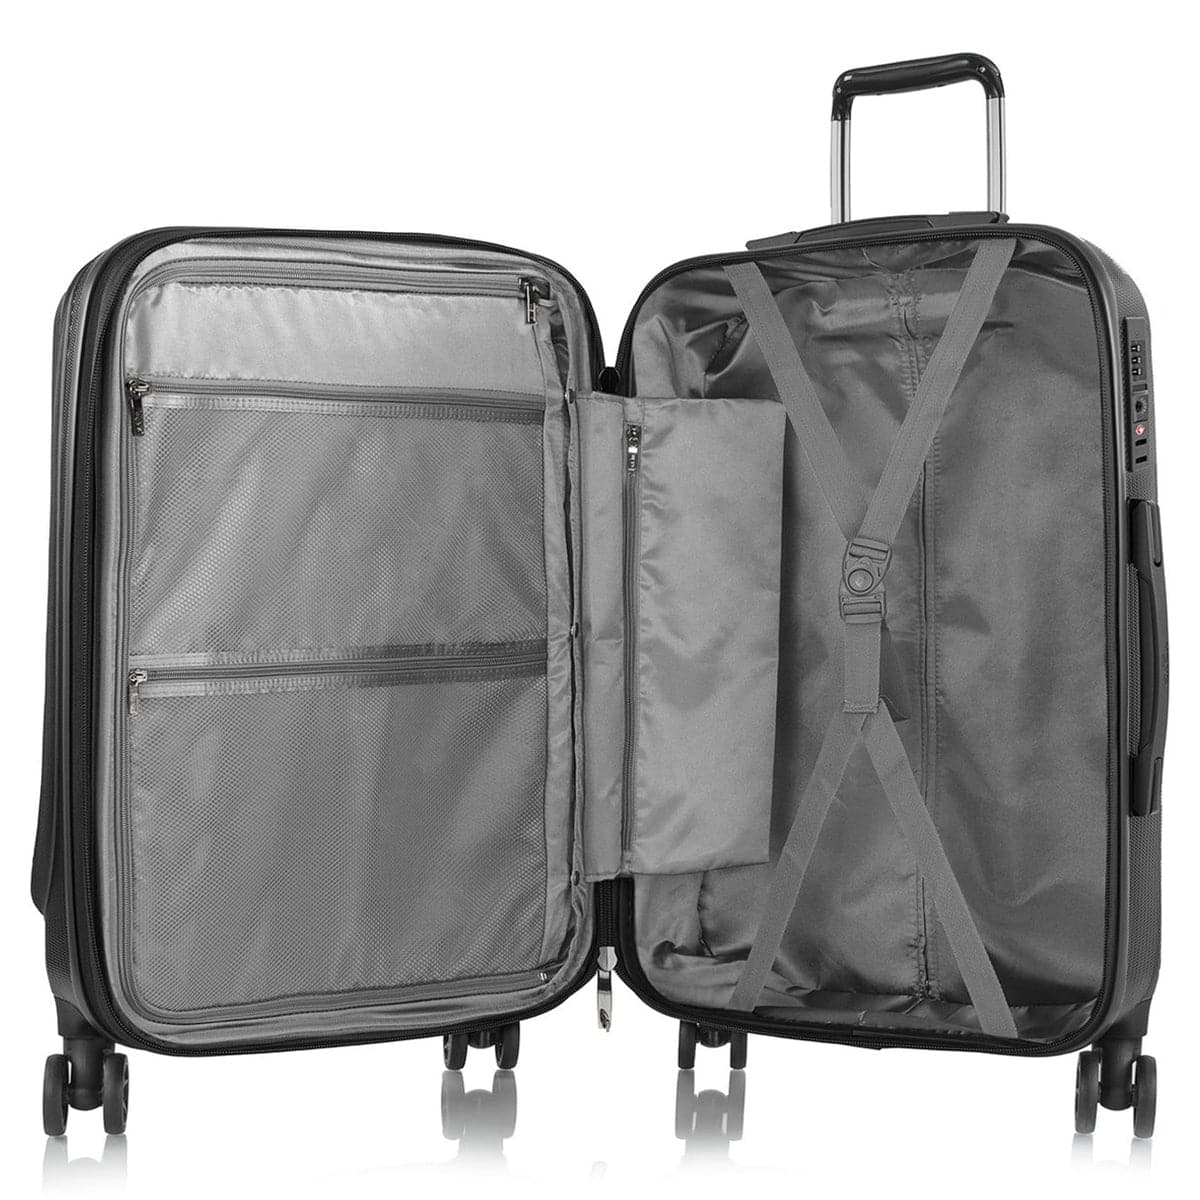 Heys Vantage Smart Access 3 Piece Spinner Luggage Set